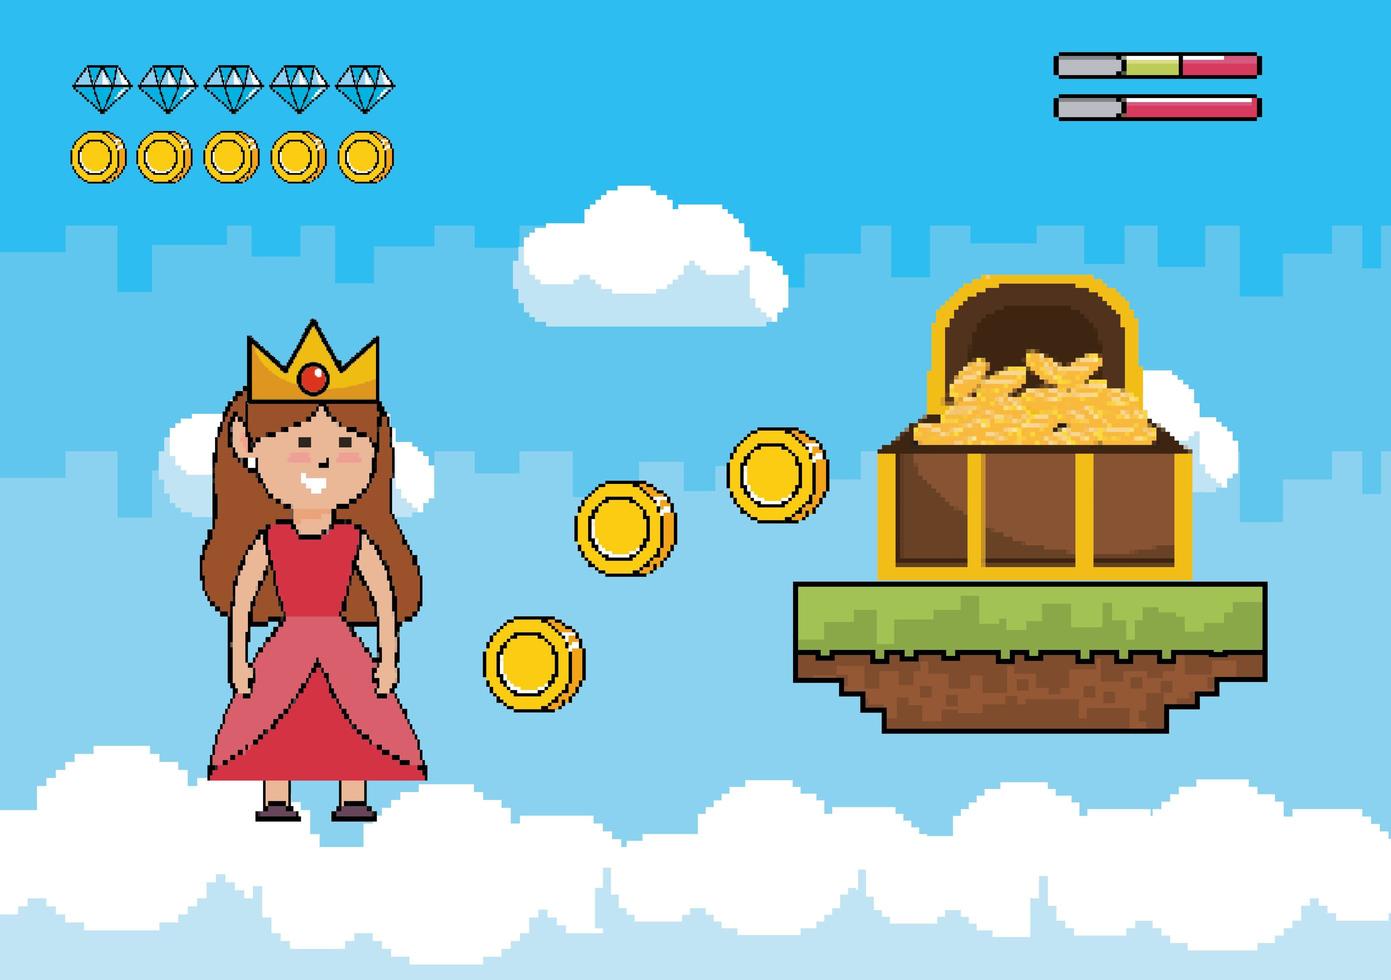 videogamescène met prinses en kist met goud vector